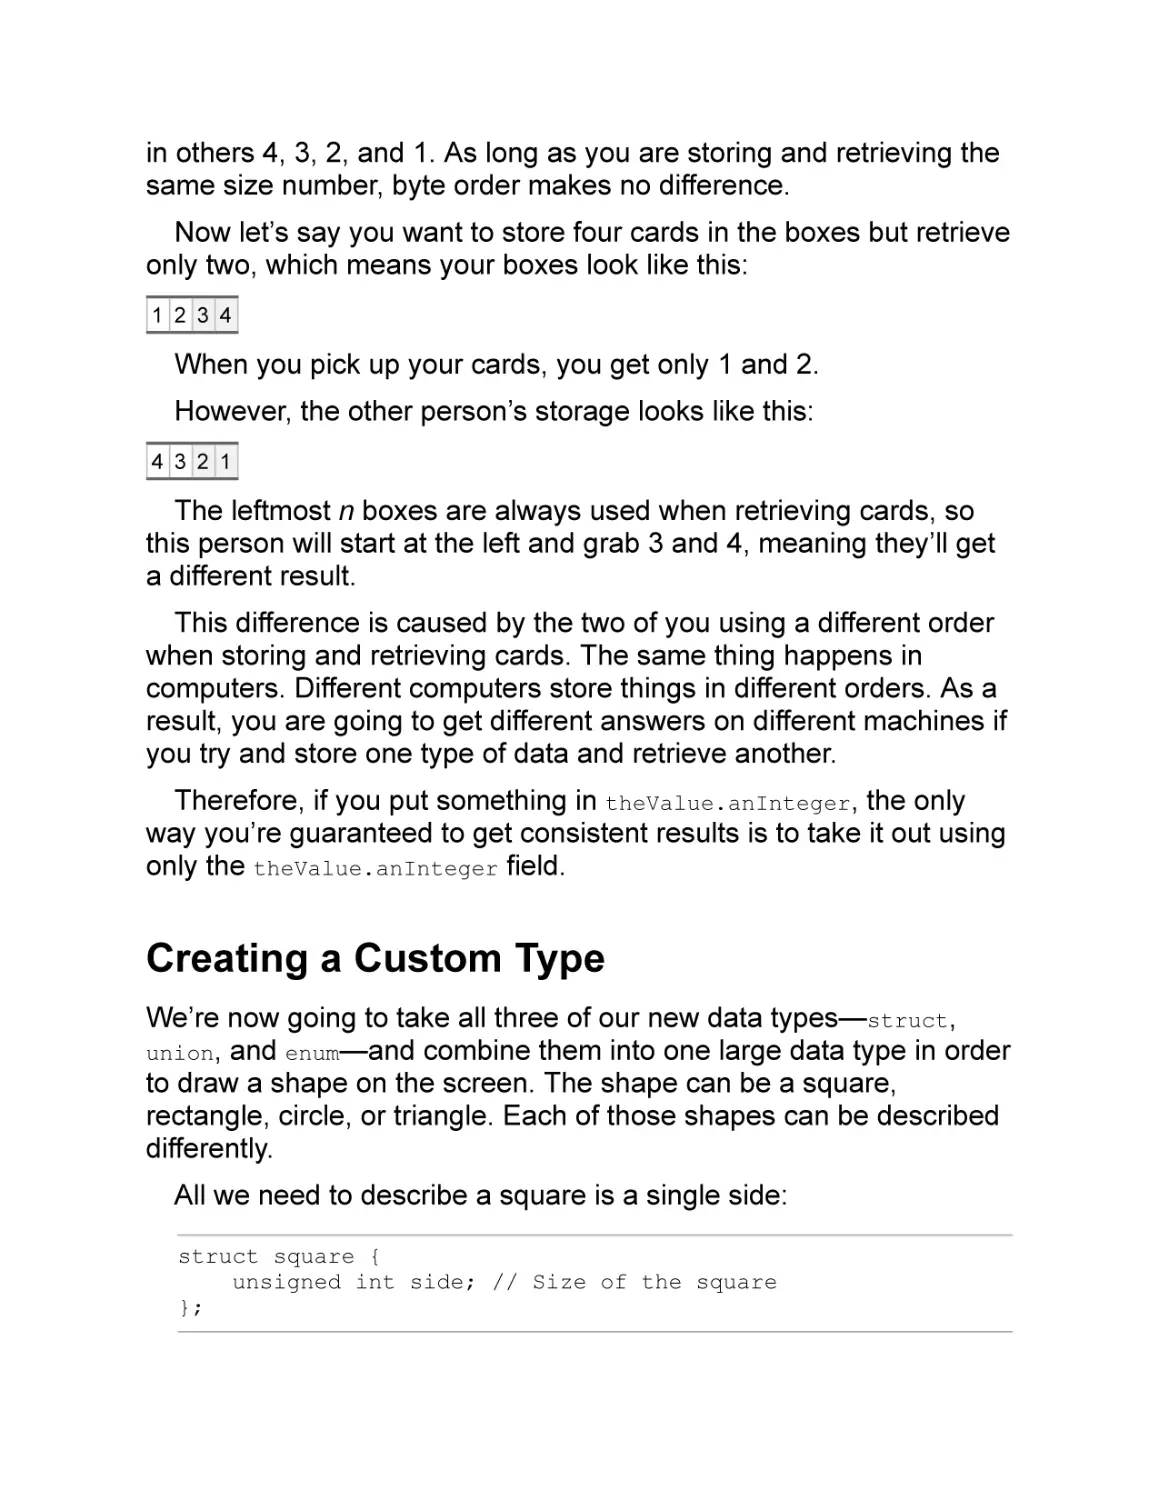 Creating a Custom Type